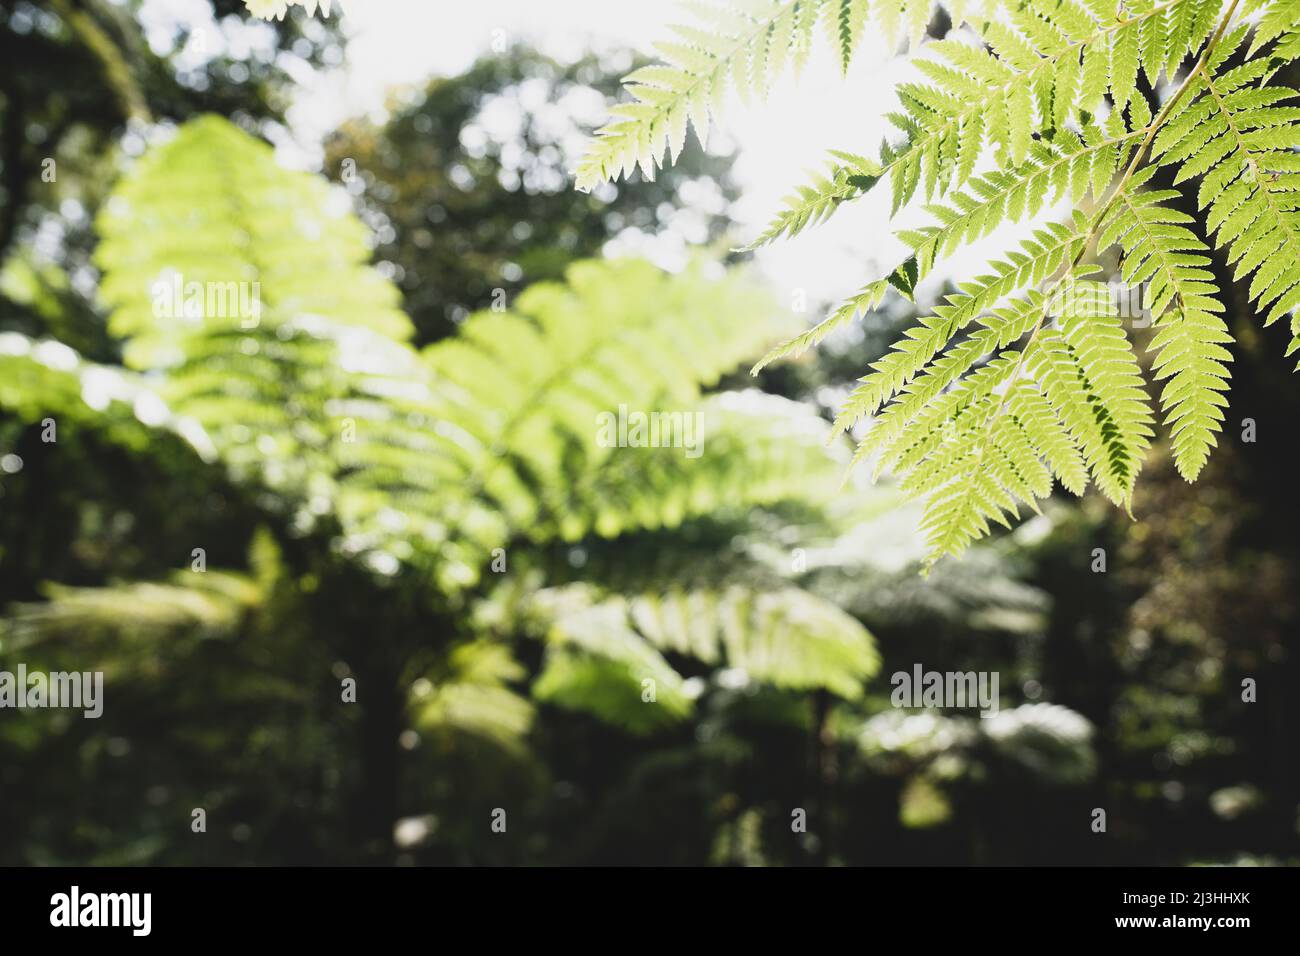 Australian tree fern, scale cup fern, Sphaeropteris cooperi, Cyathea cooperi, Monte Palace Tropical Garden, Monte, Funchal, Madeira, Portugal, Europe Stock Photo